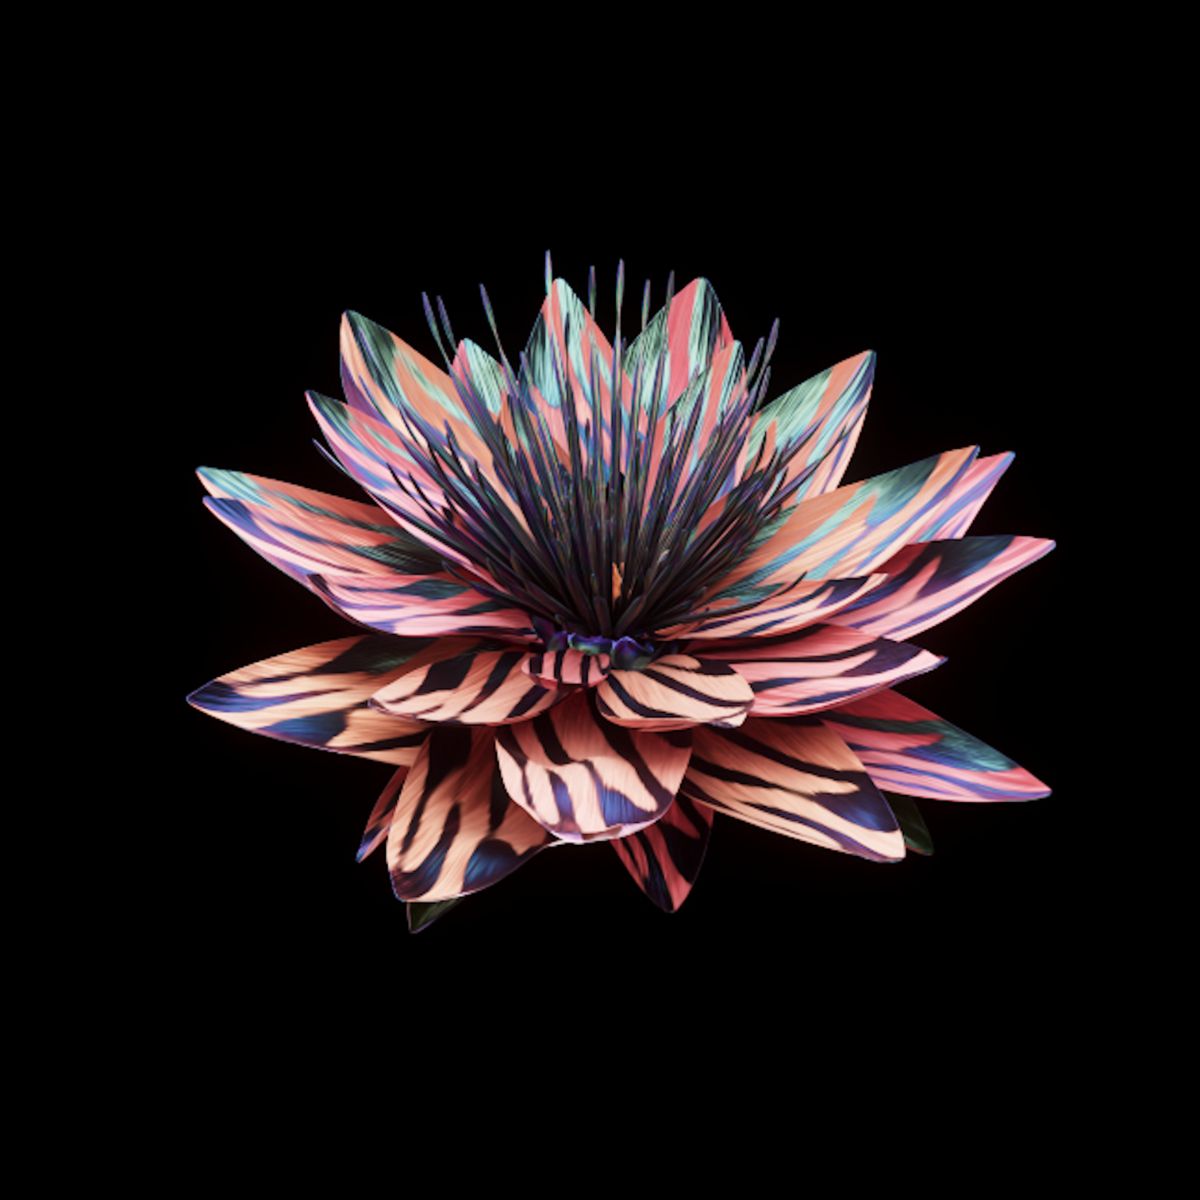 Heterosis flower nfts by Mat Collishaw